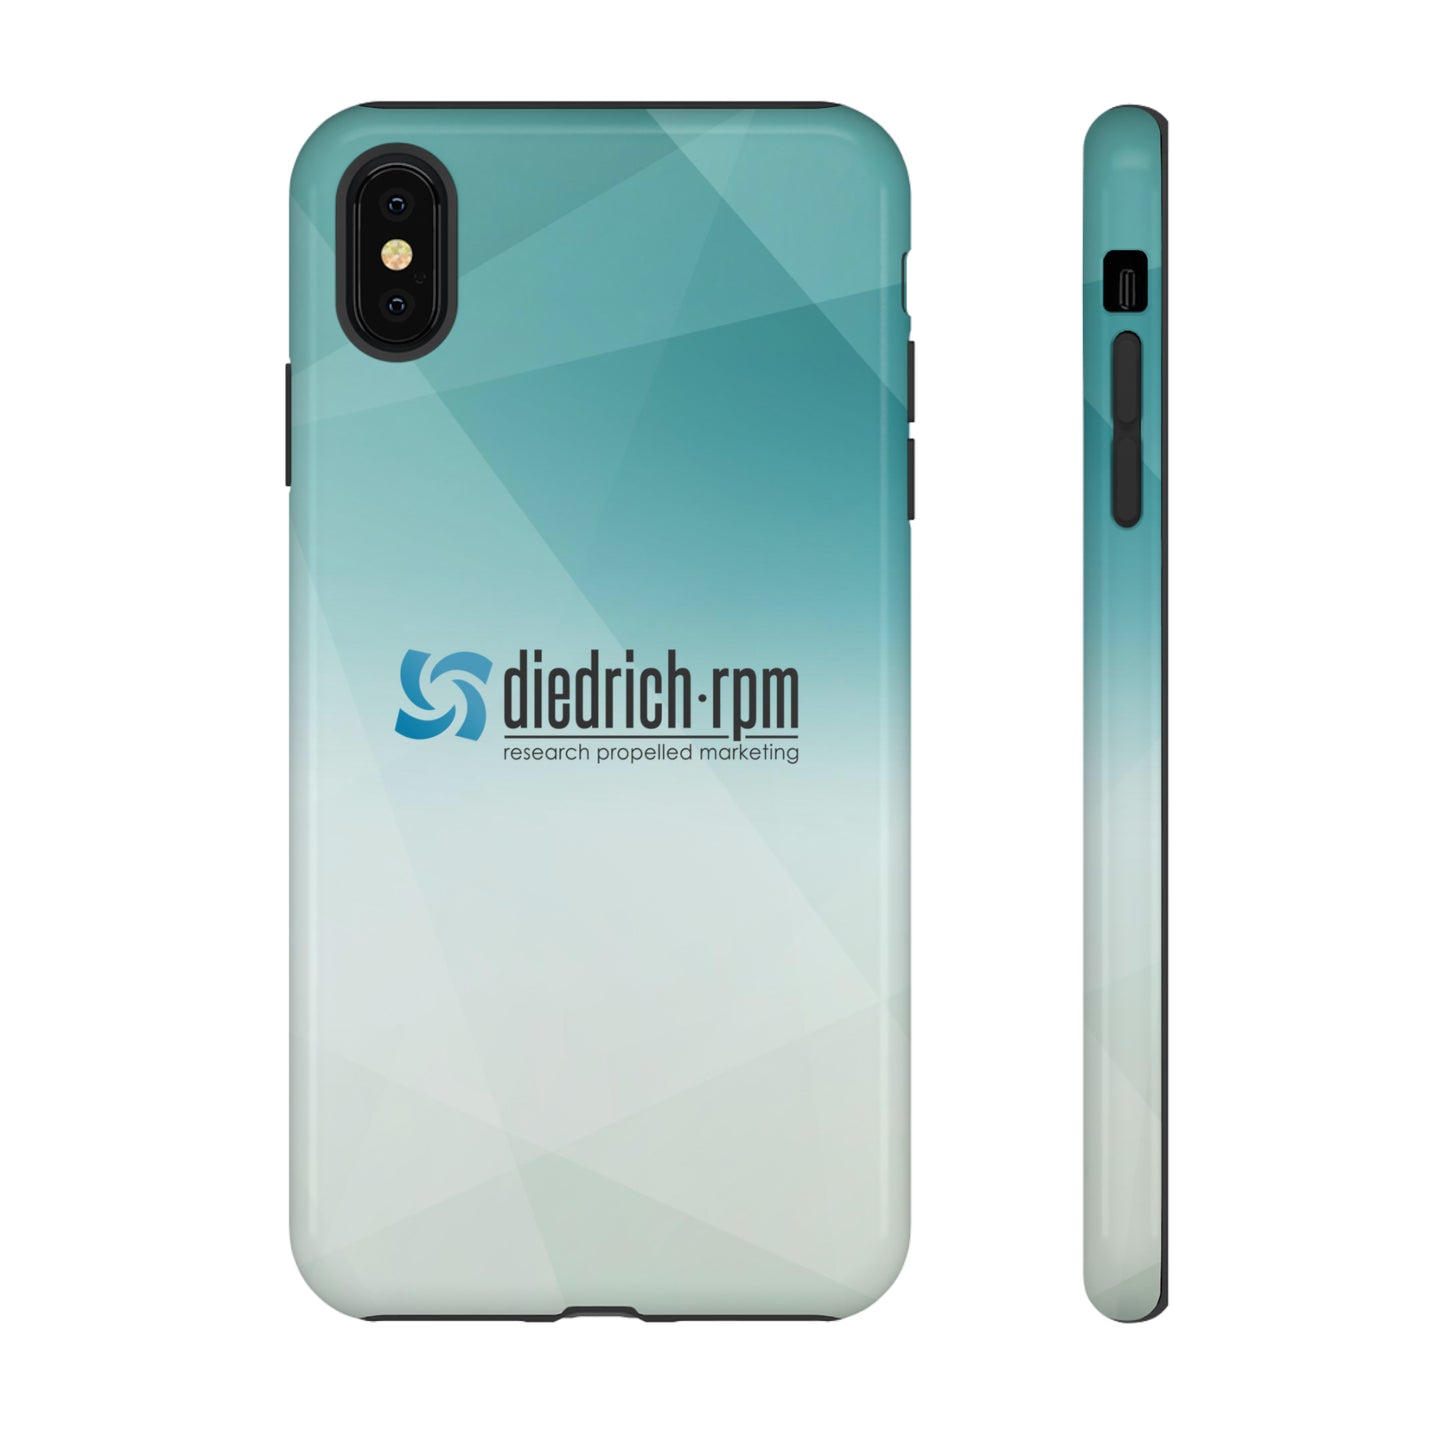 DRPM iPhone Case